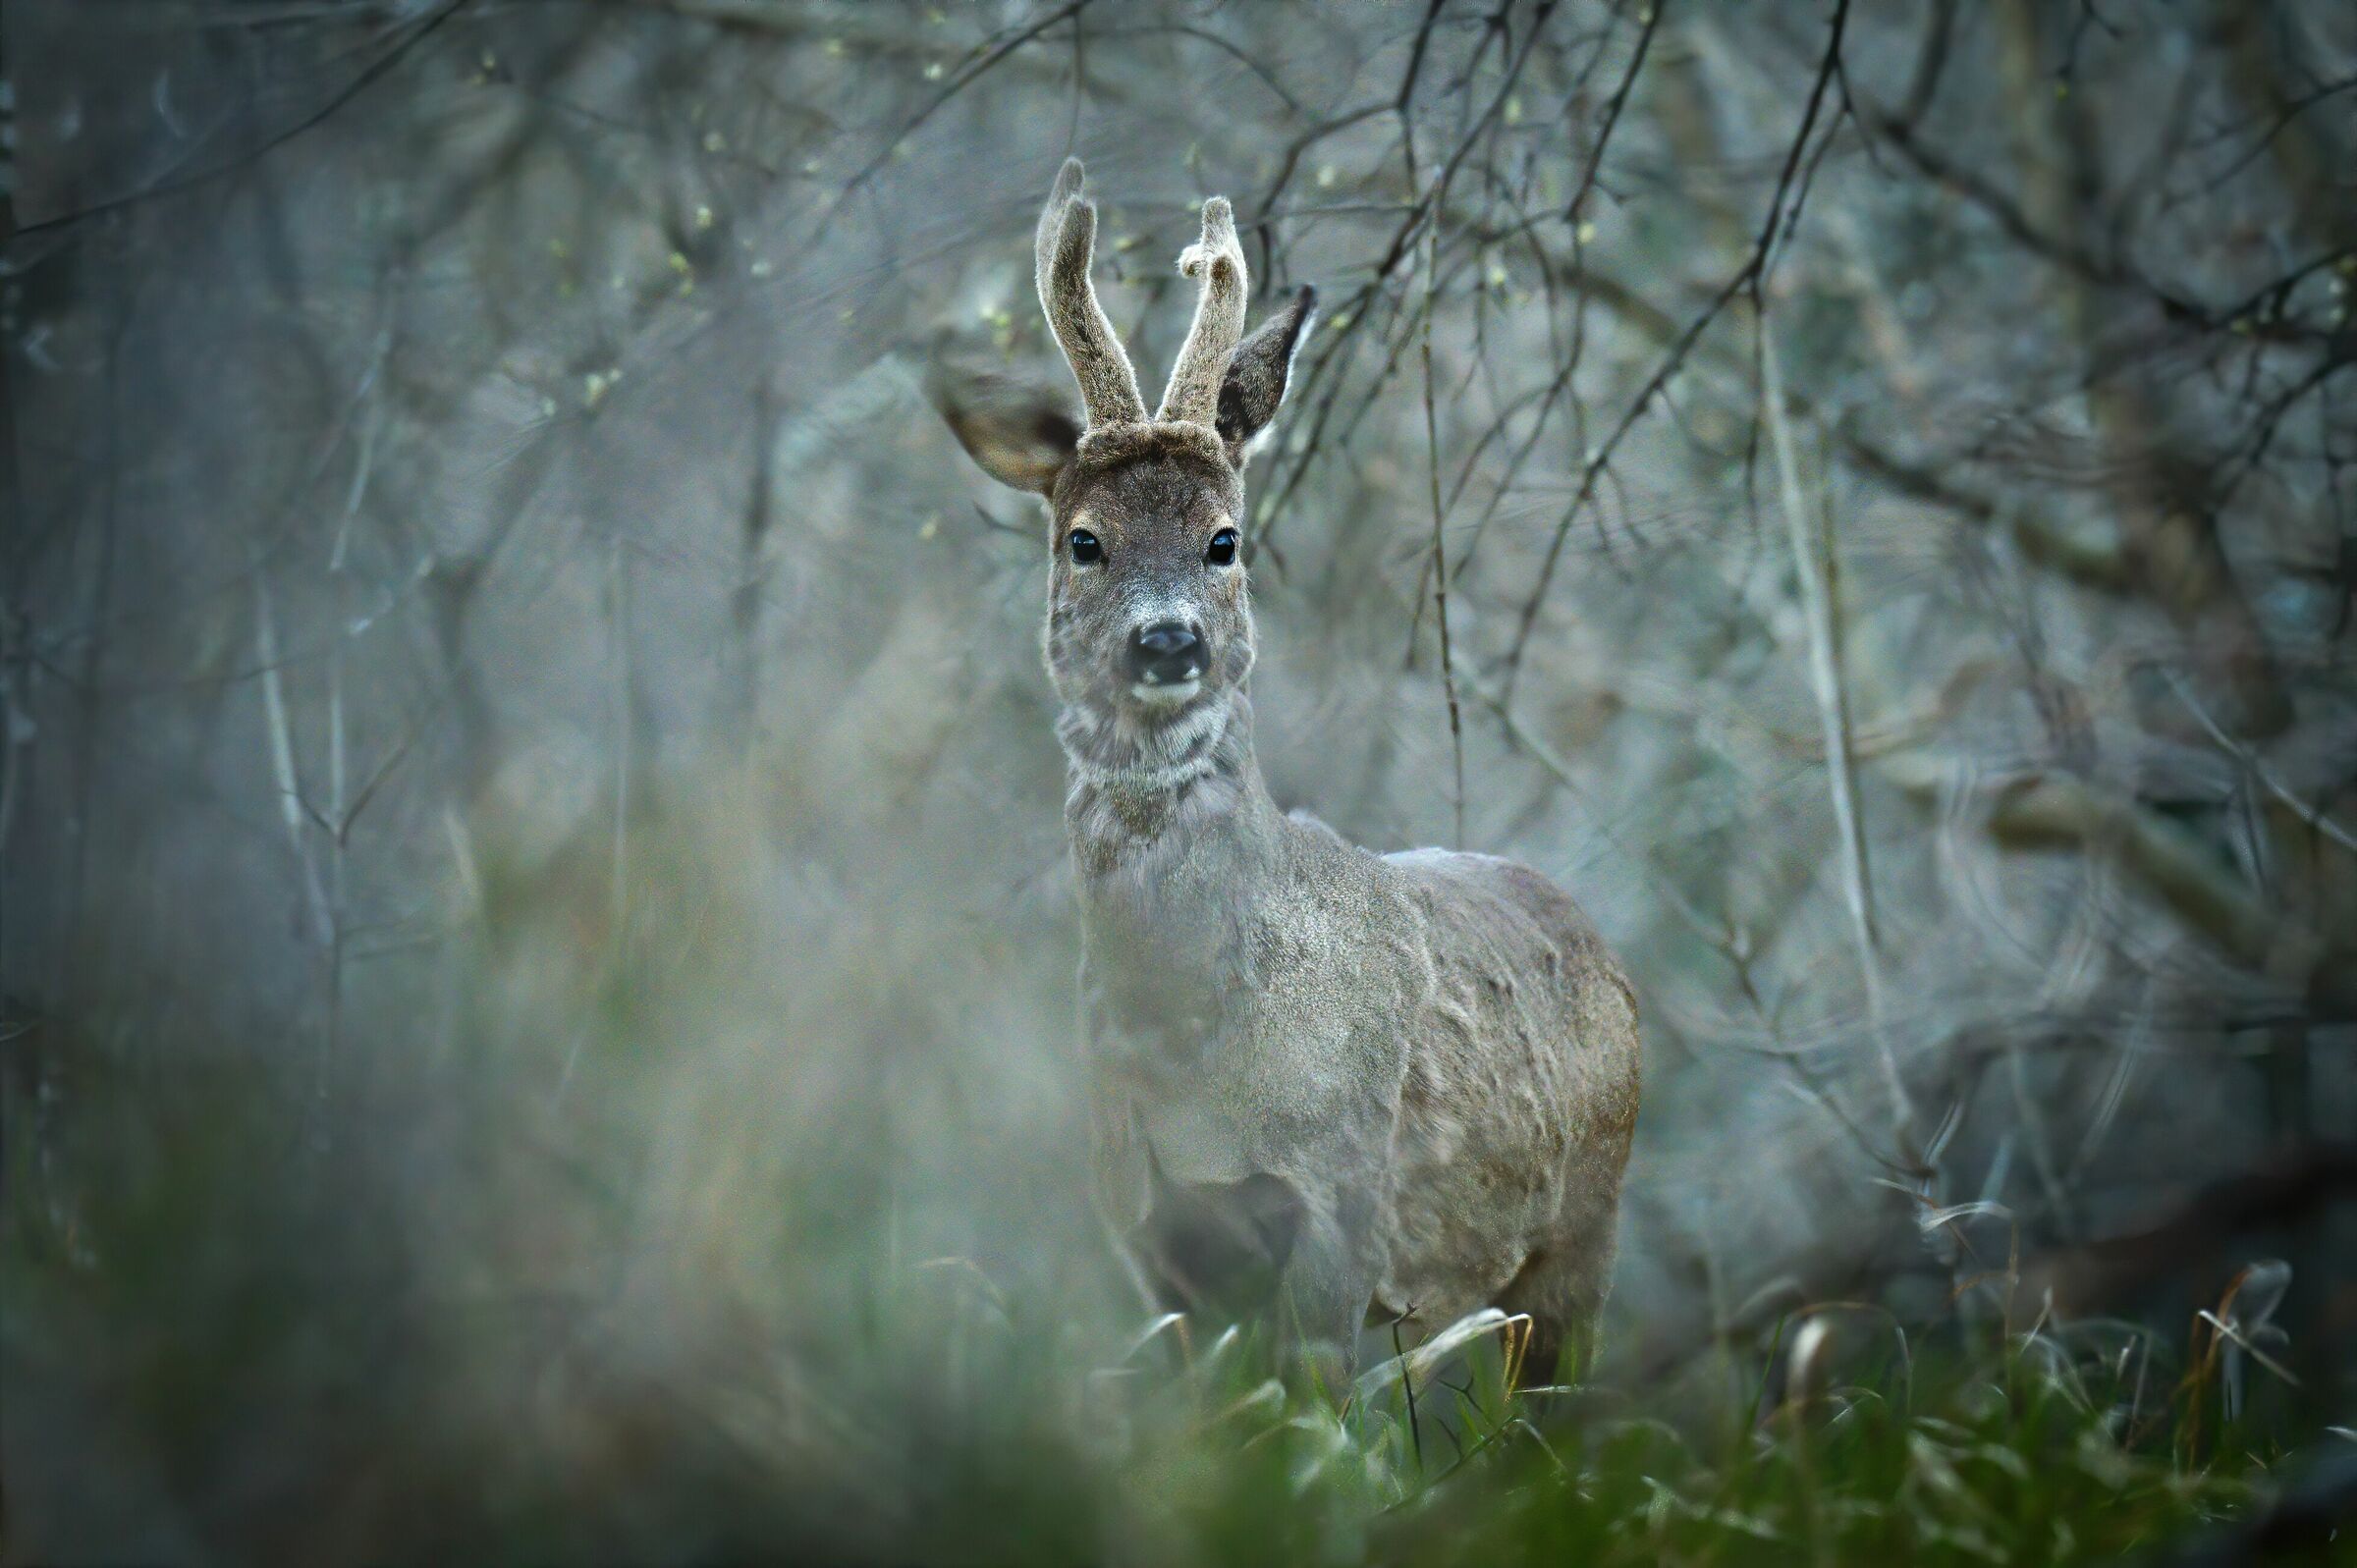 Roe deer at dusk - With Denoise Topaz...